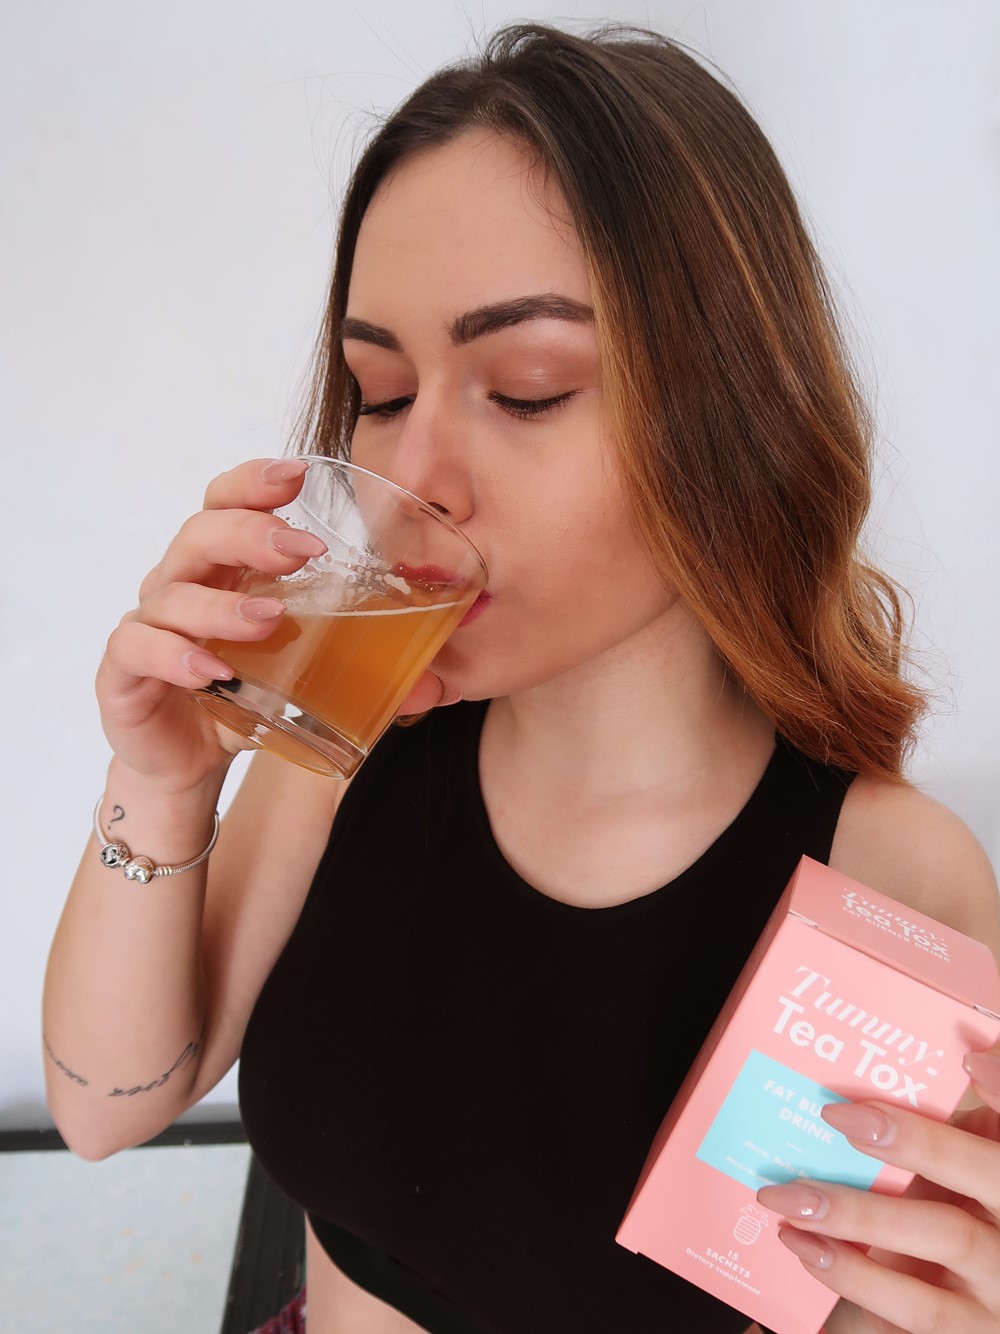 Recensione Fat Burner Drink, prodotti Tummy Tea Tox di Mina Masotina